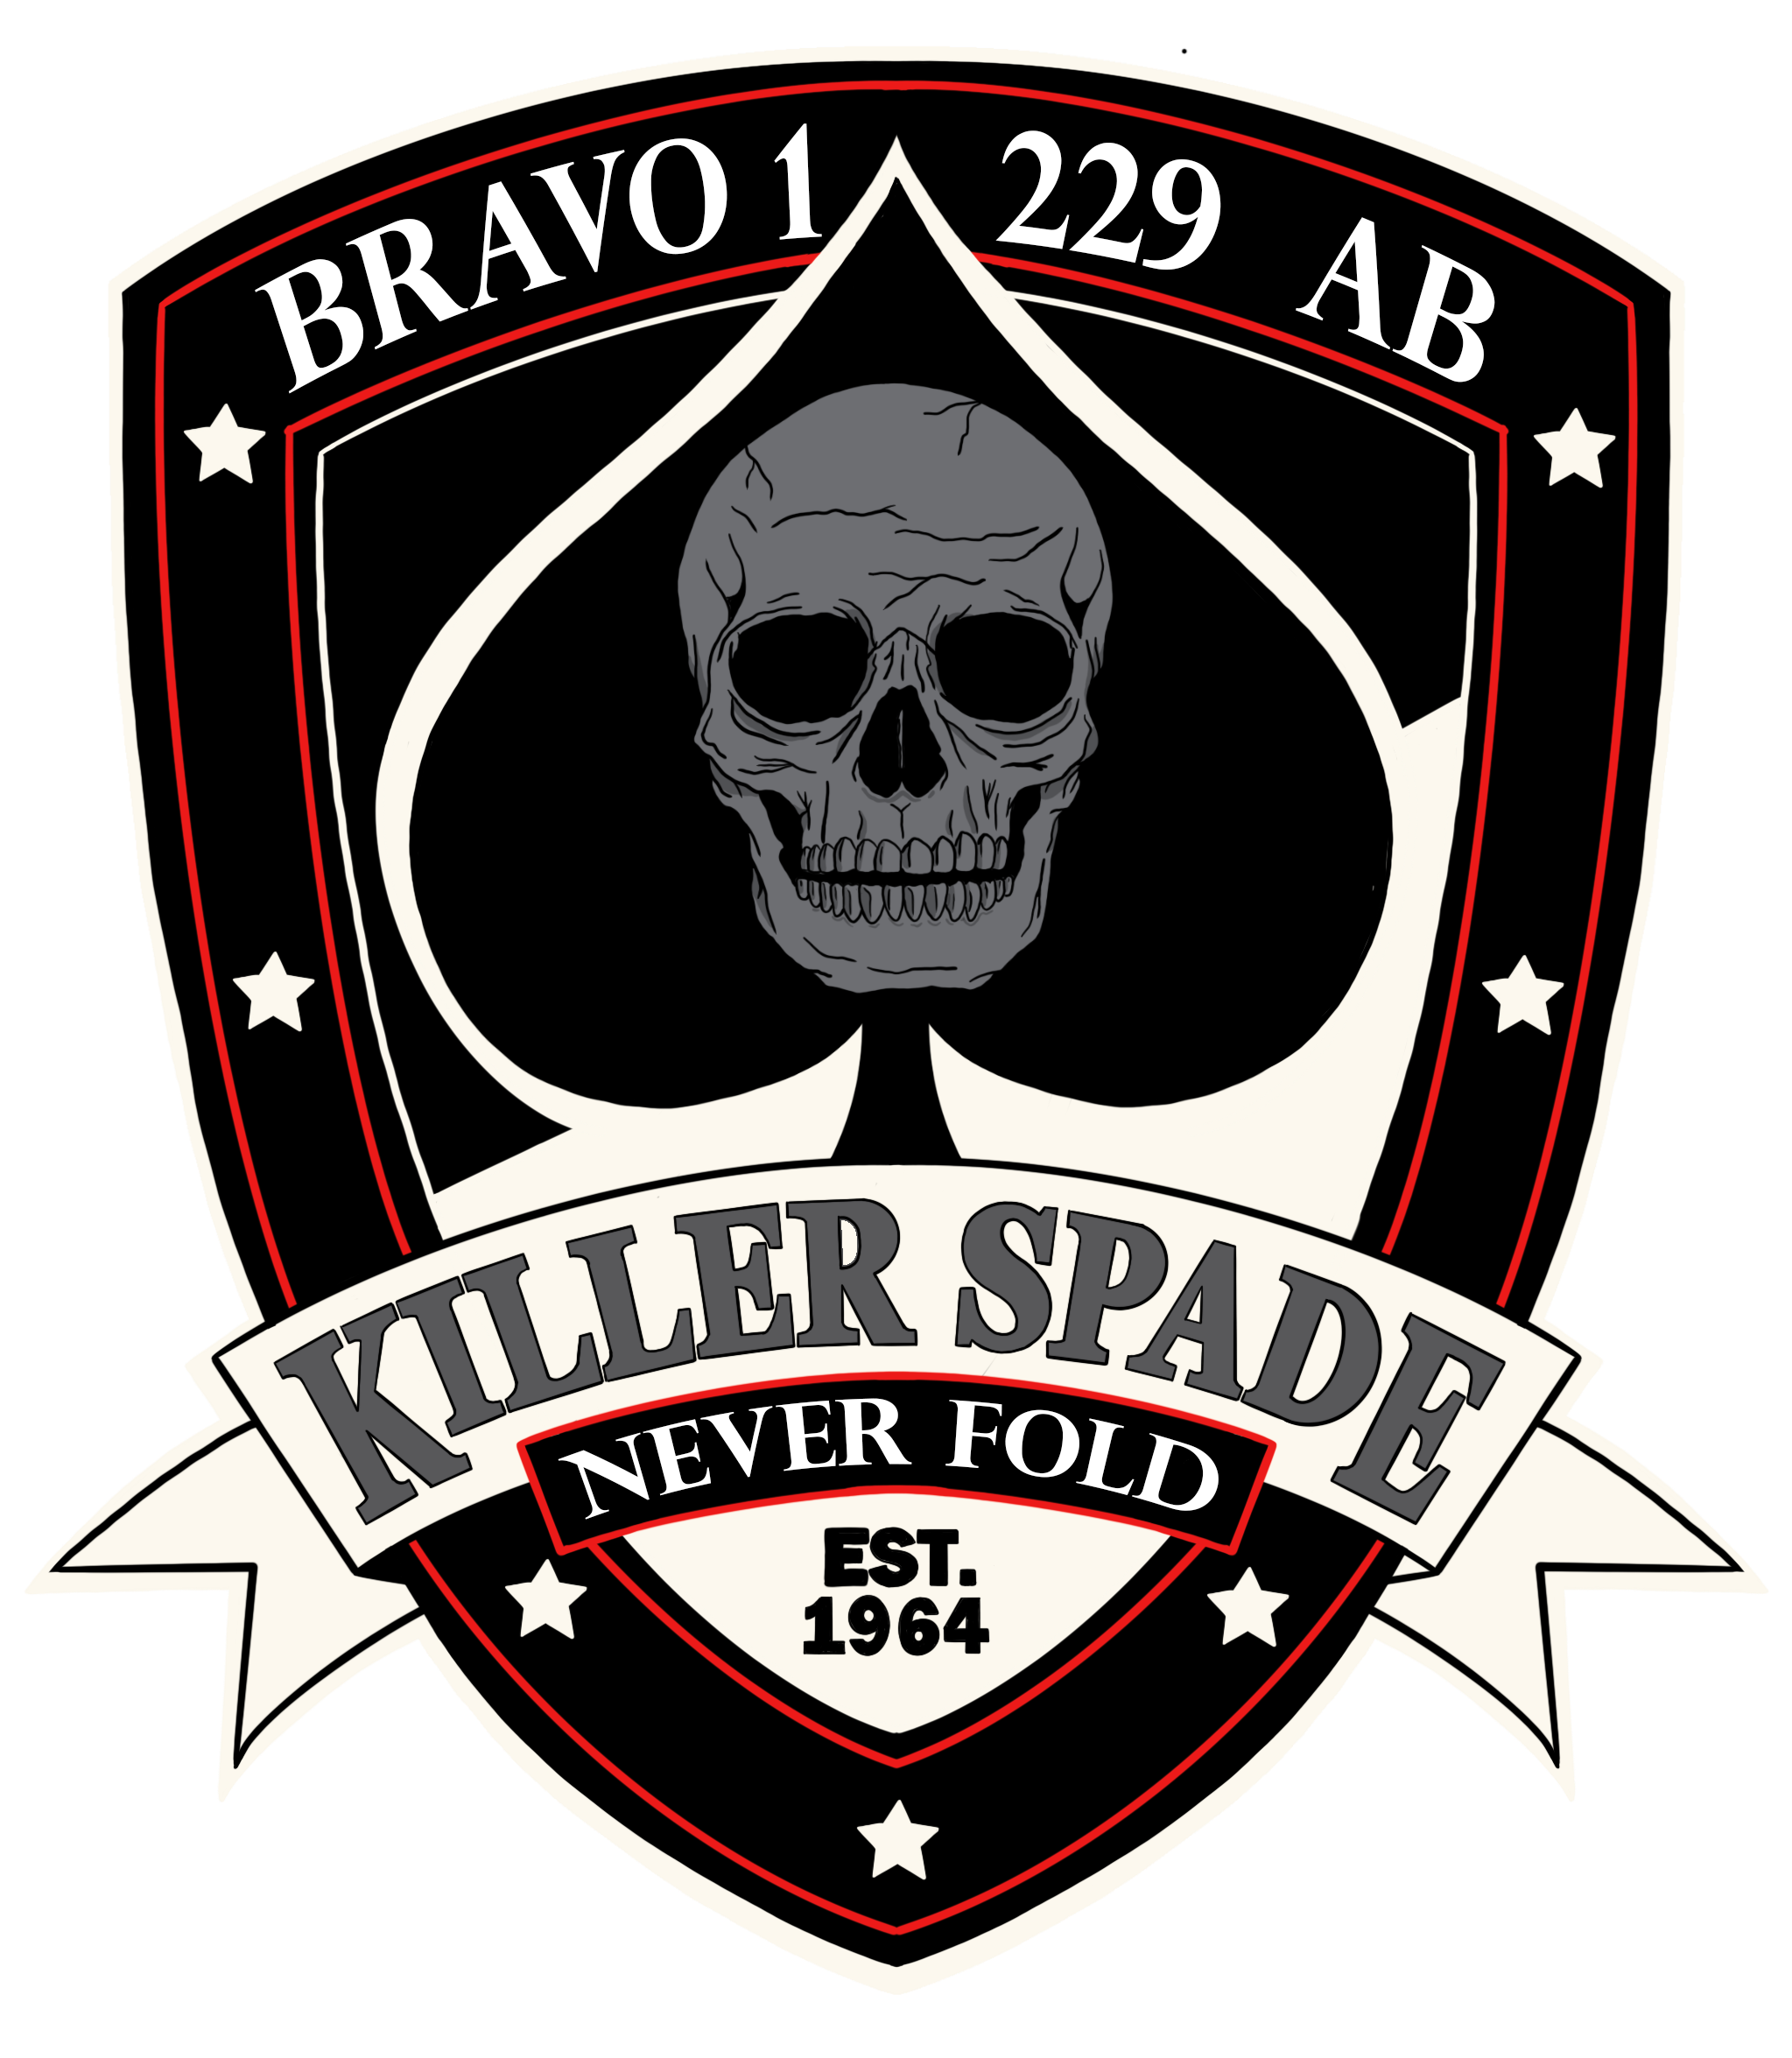 B Co, 1-229 ARB "Killer Spades"